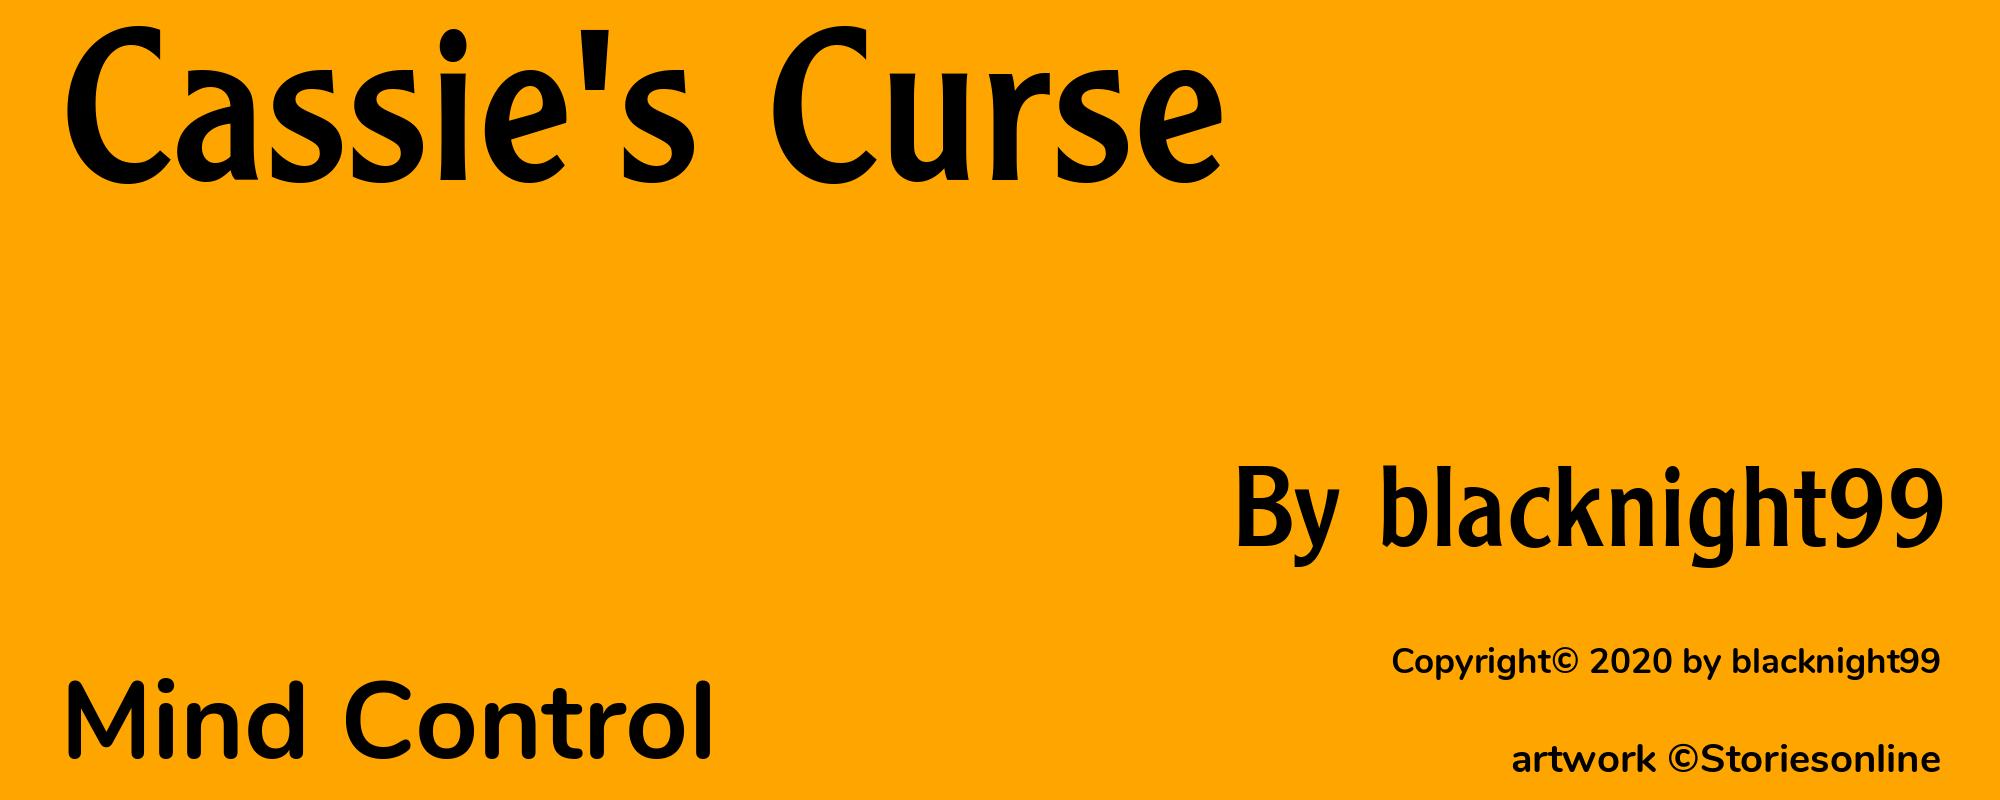 Cassie's Curse - Cover